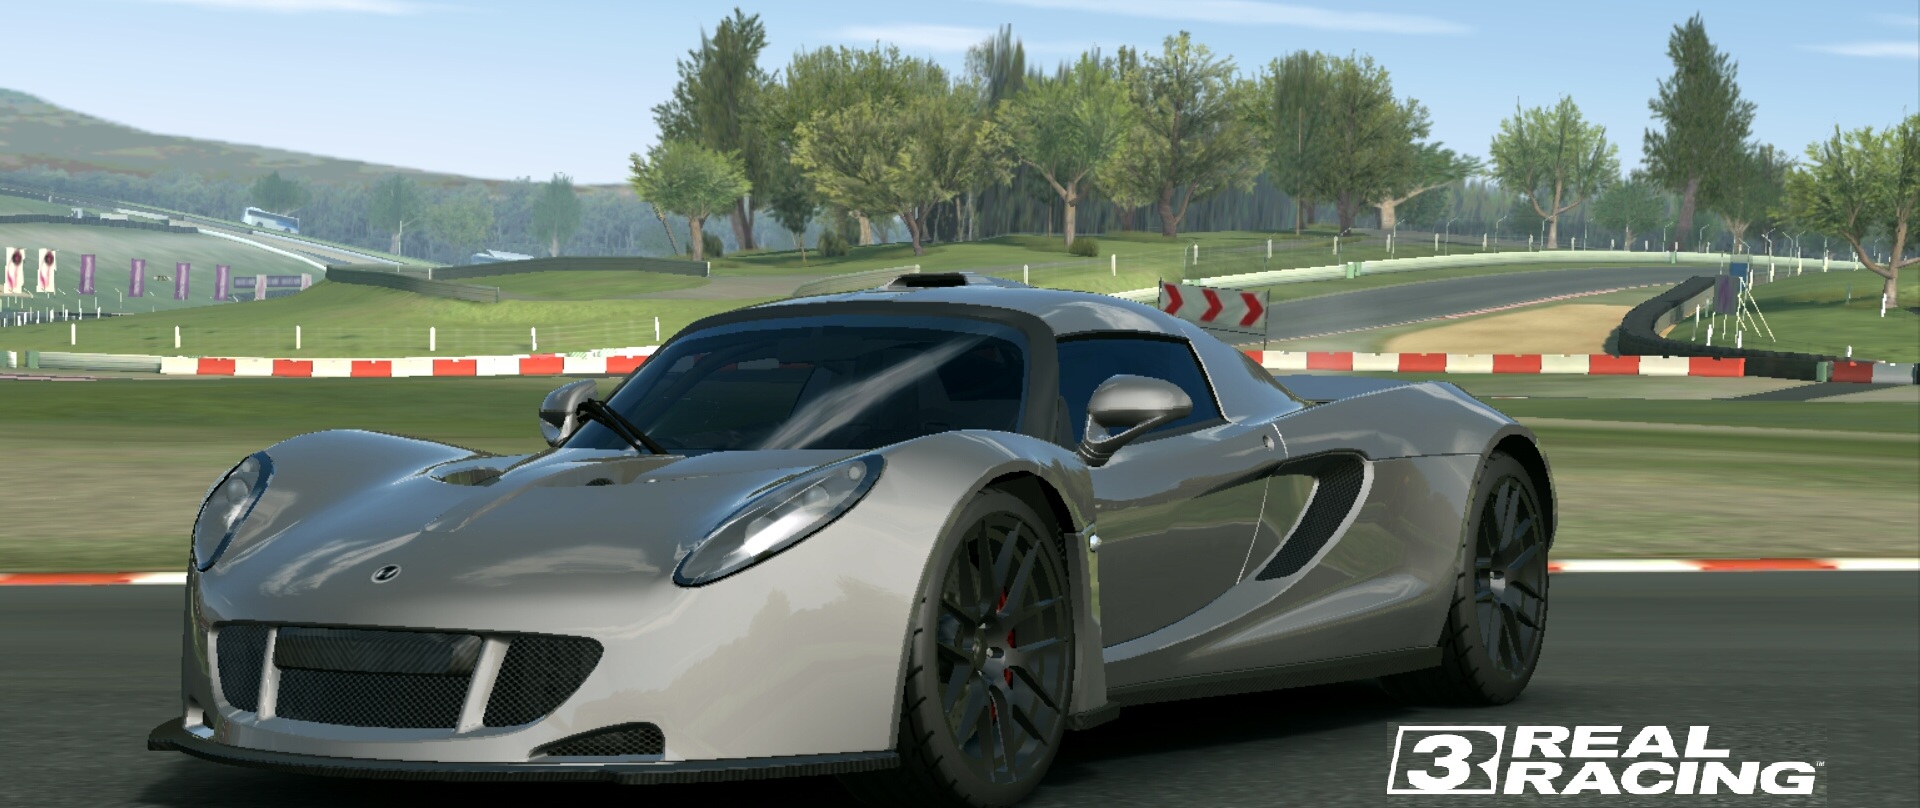 real-racing-topapps4u